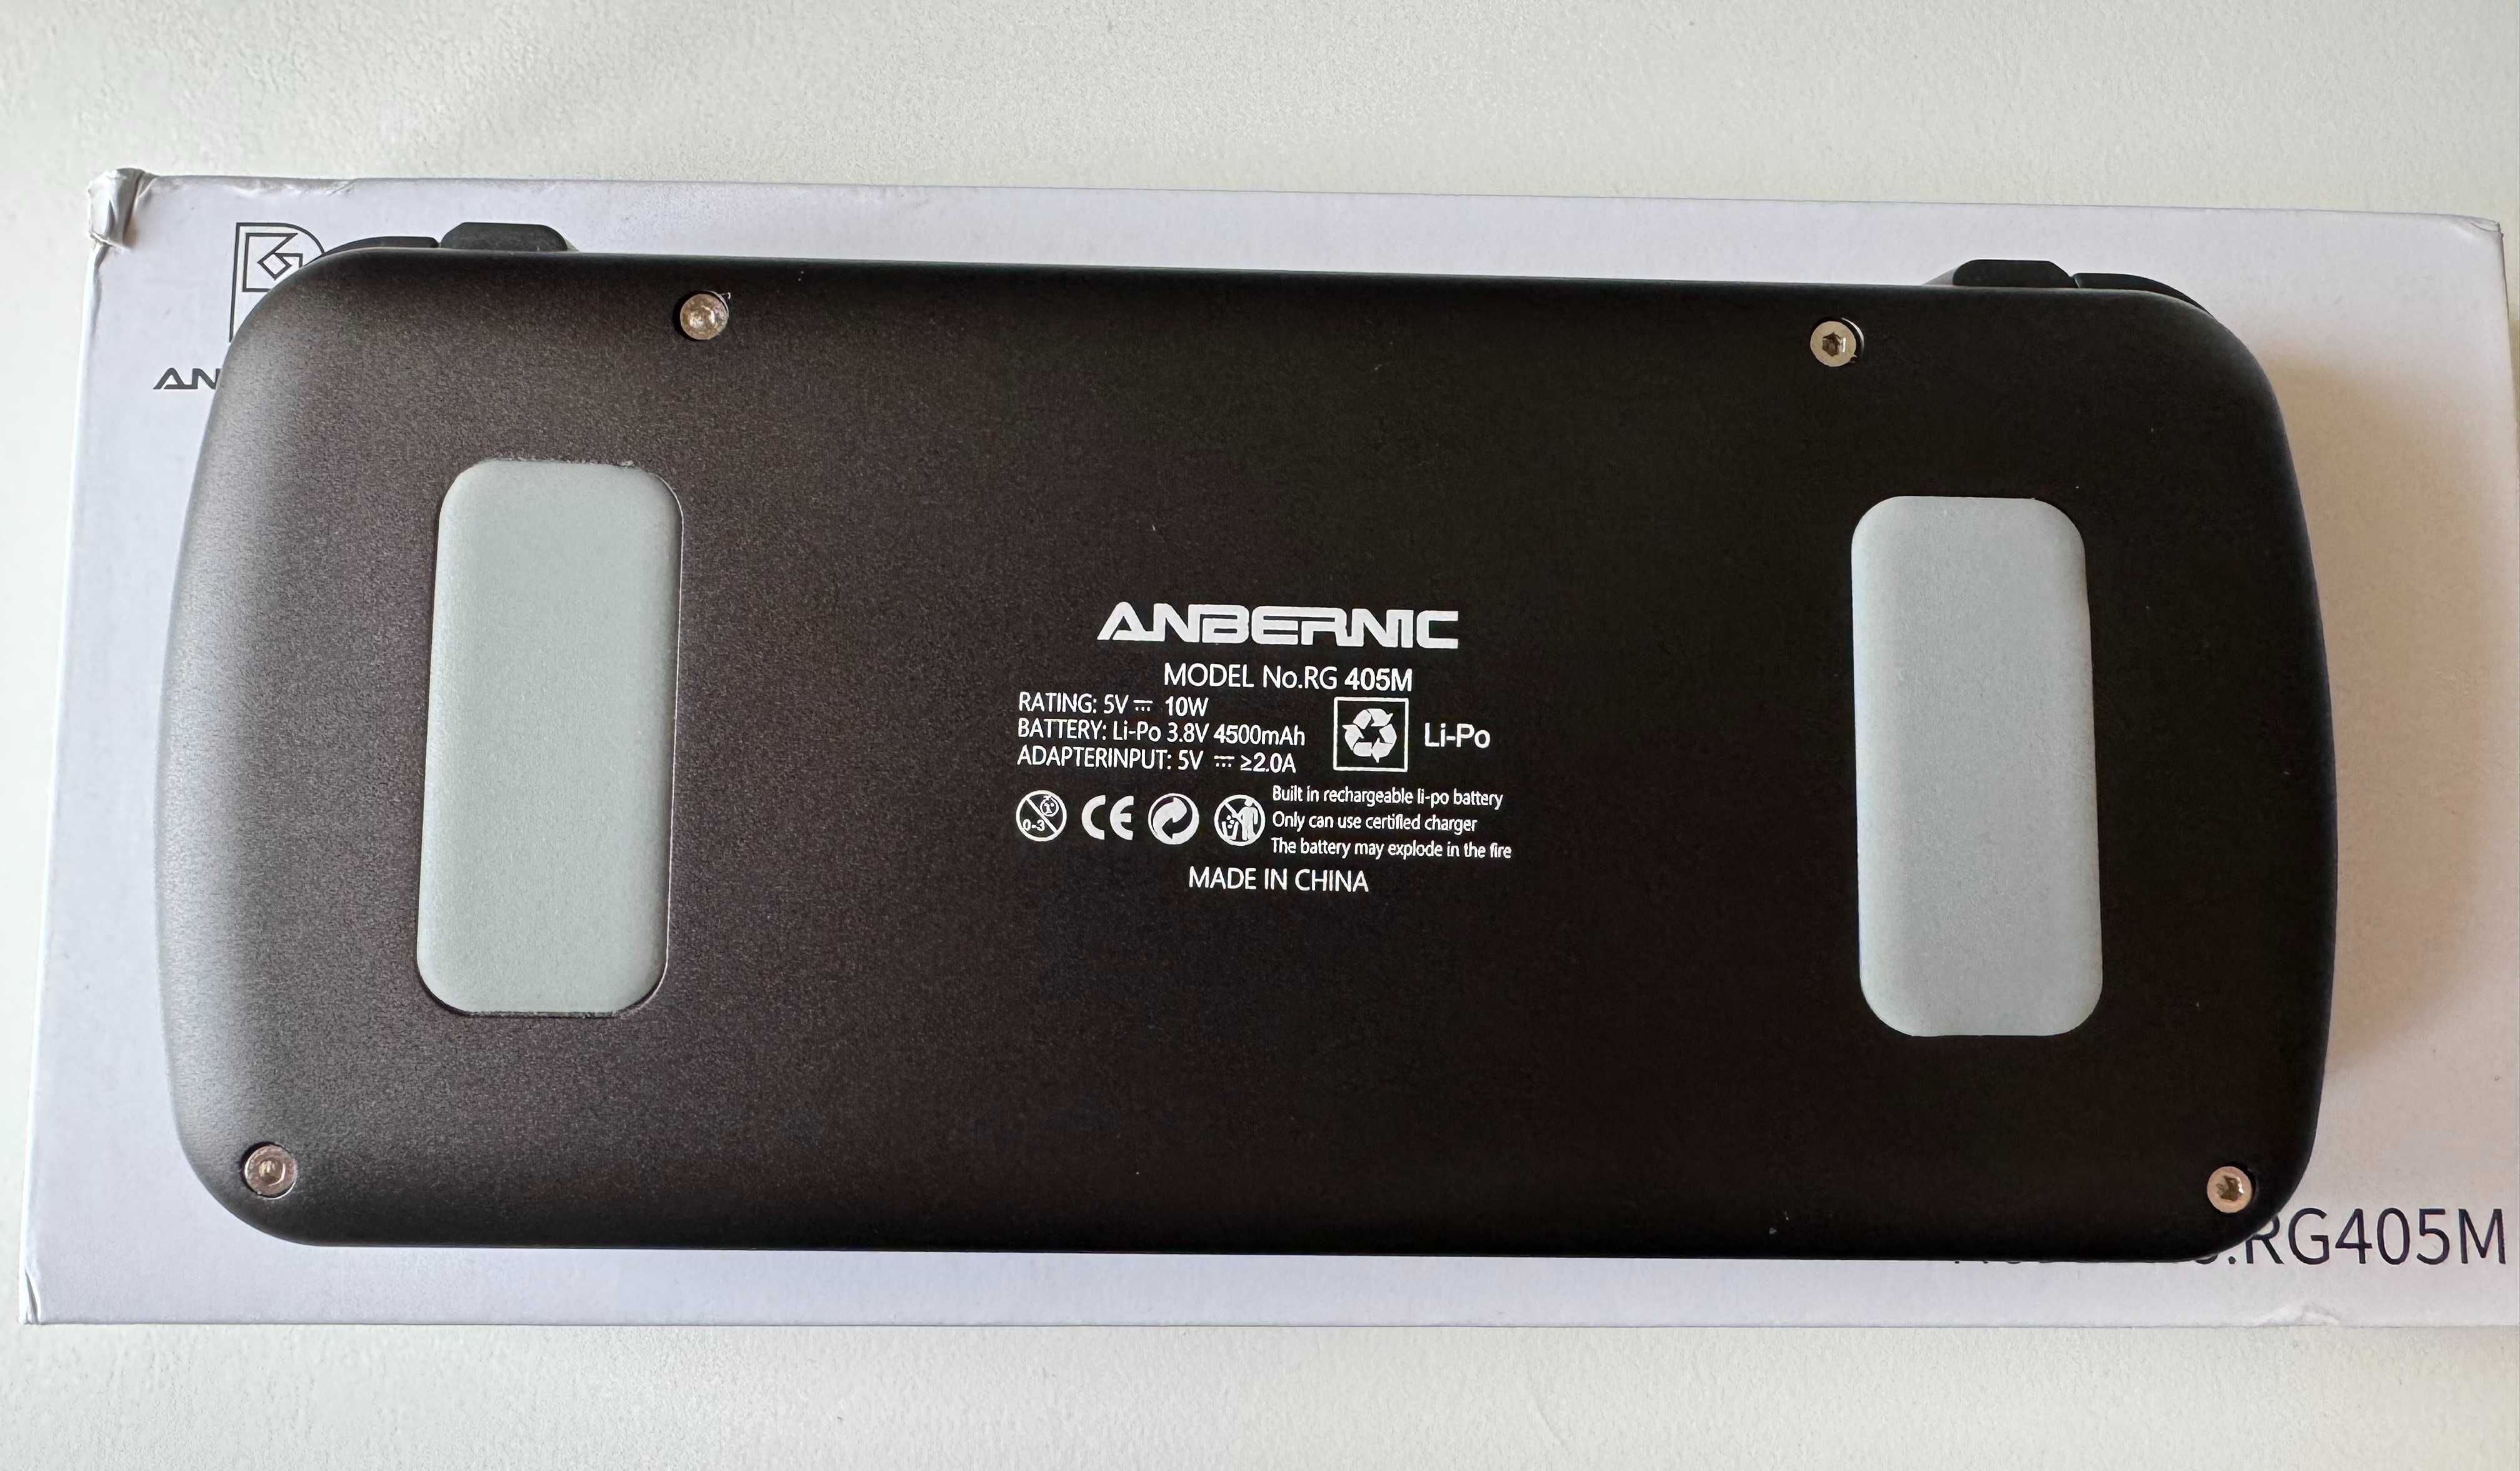 Anbernic RG405M - Consola jocuri retro (retro gaming)